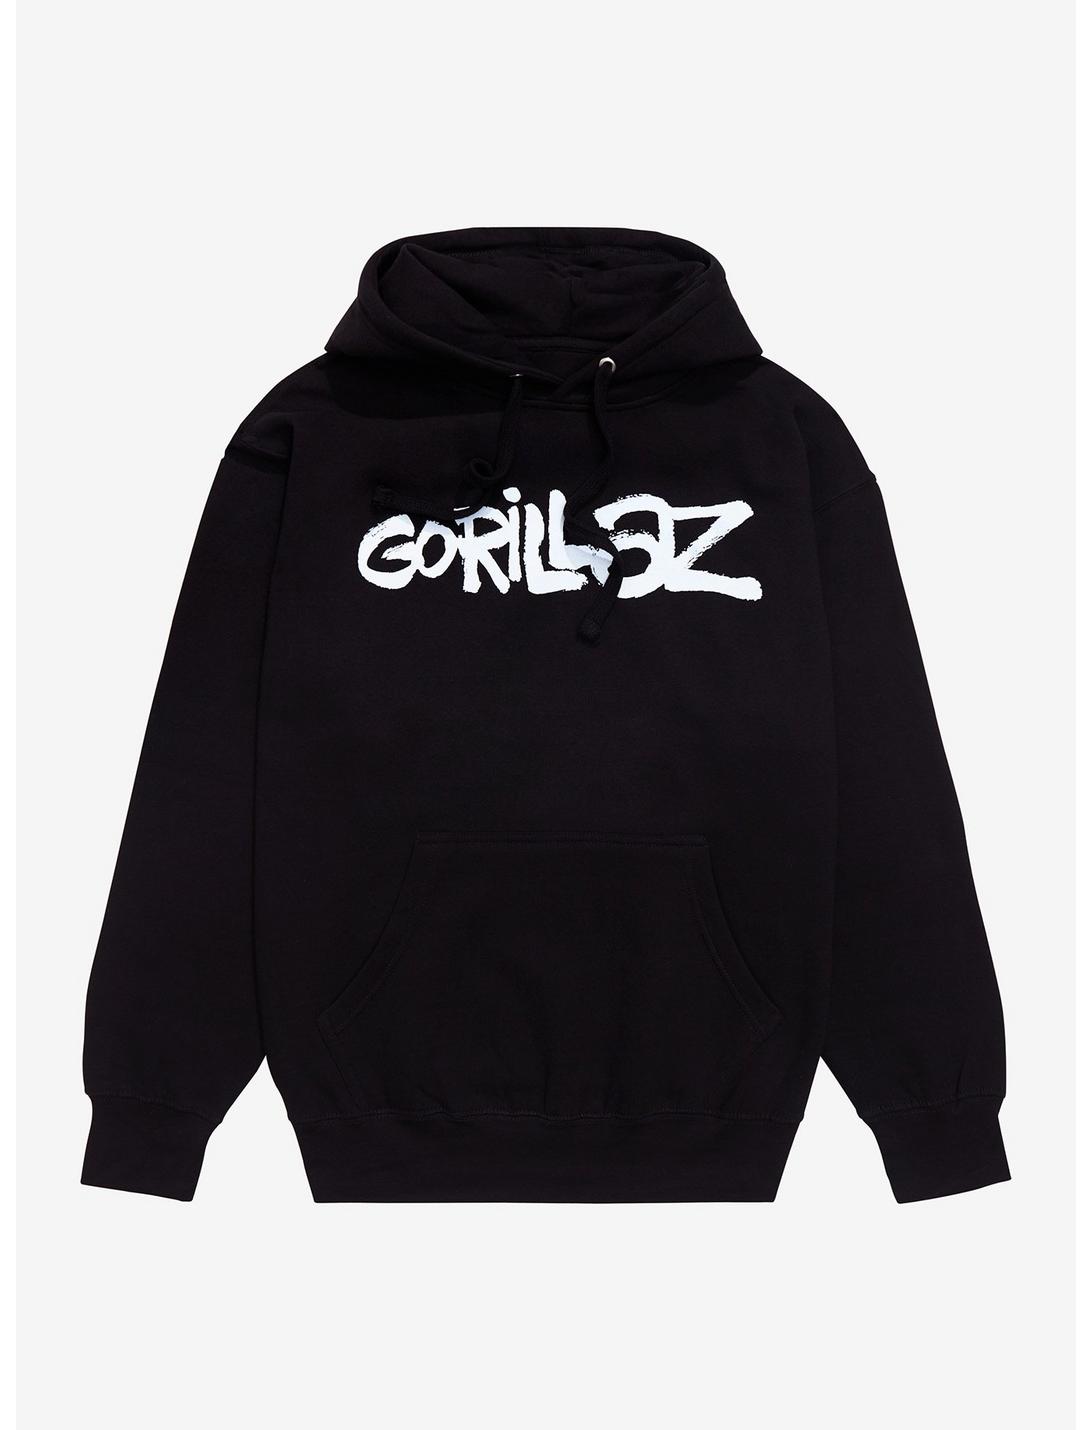 Gorillaz Logo Girls Hoodie, BLACK, hi-res